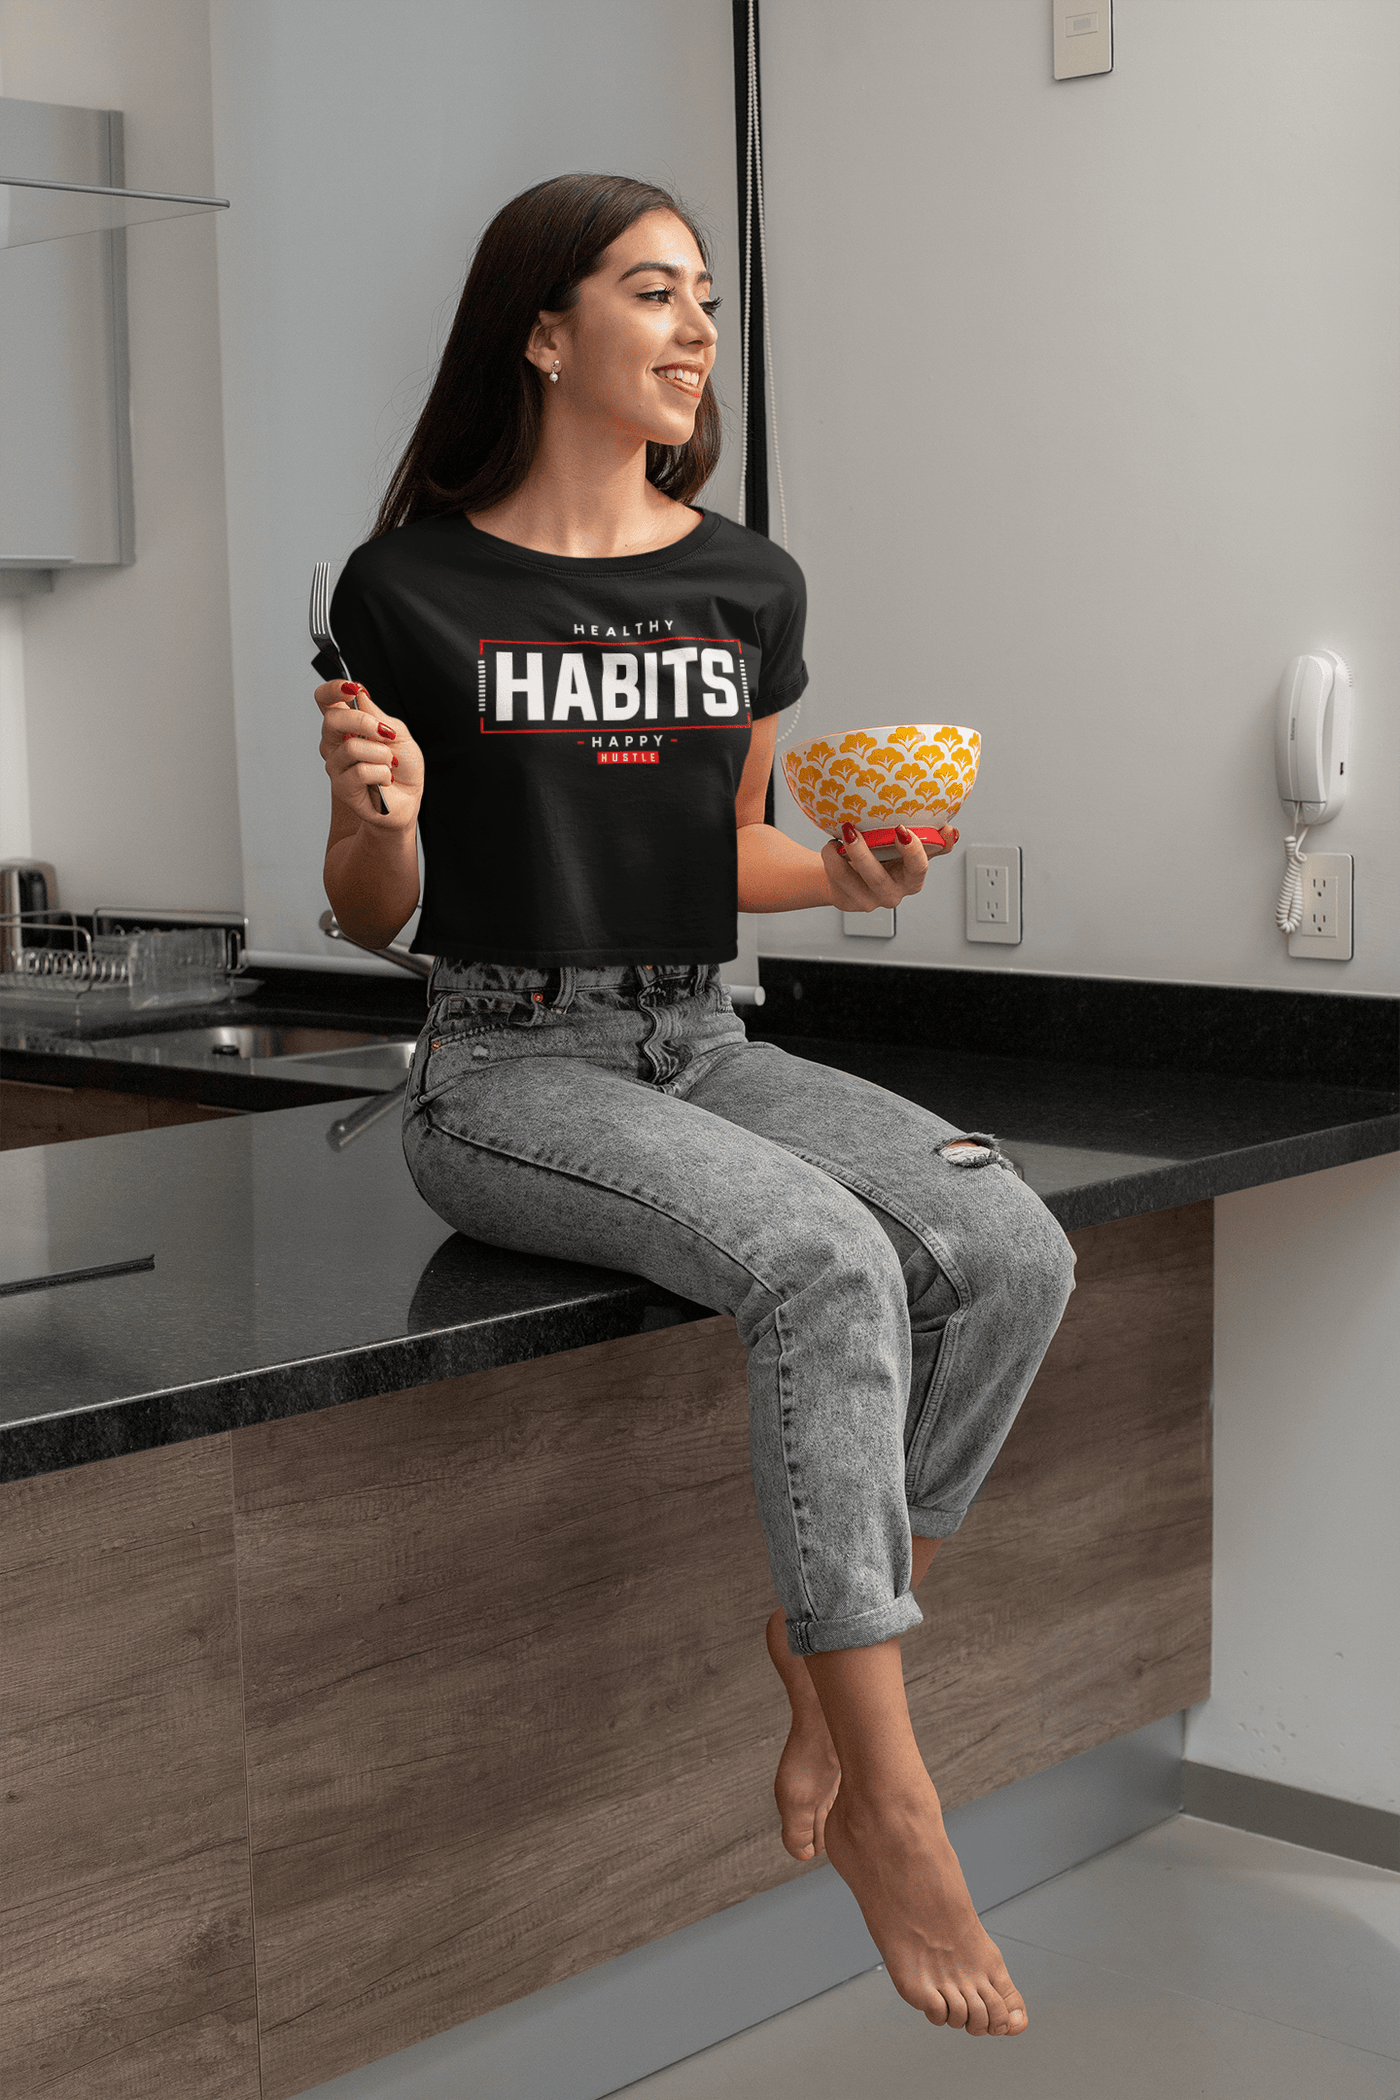 Healthy Habits, Happy Hustle | Women's Empowerment T-Shirt - Statement Piece NY